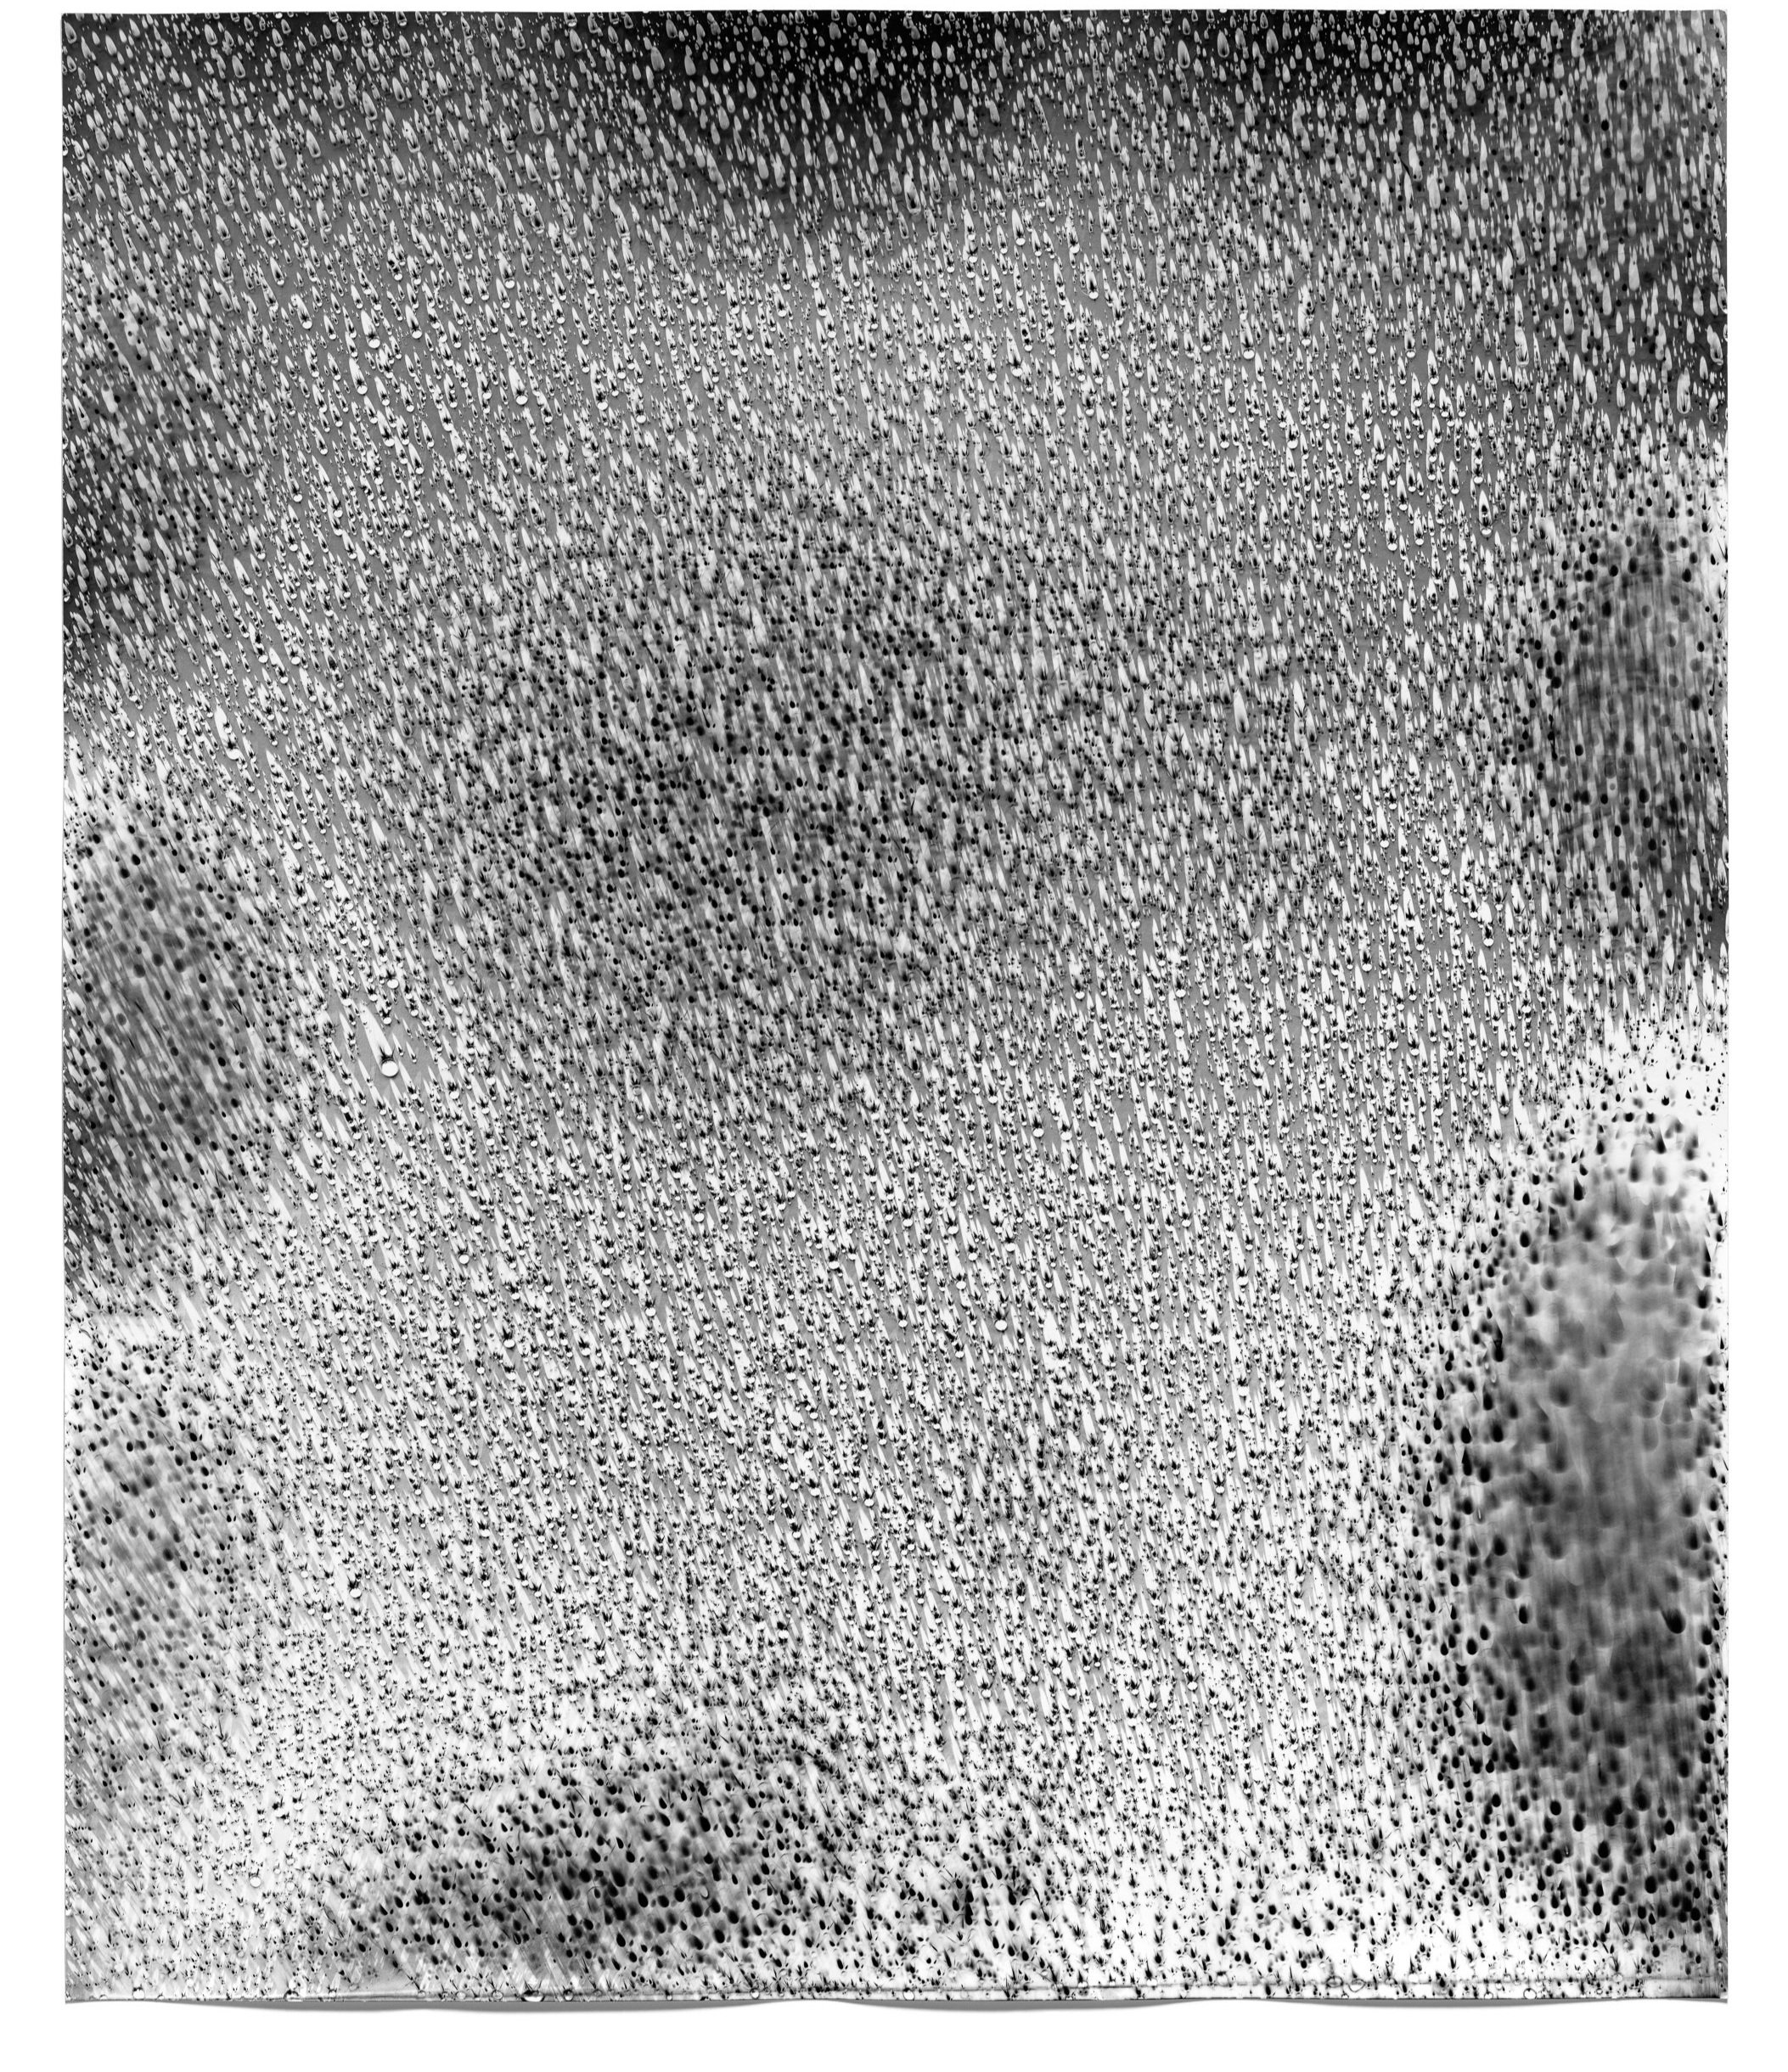   Rain Study (Puna 6),  2014   Silver gelatin photogram 24 x 20 in 